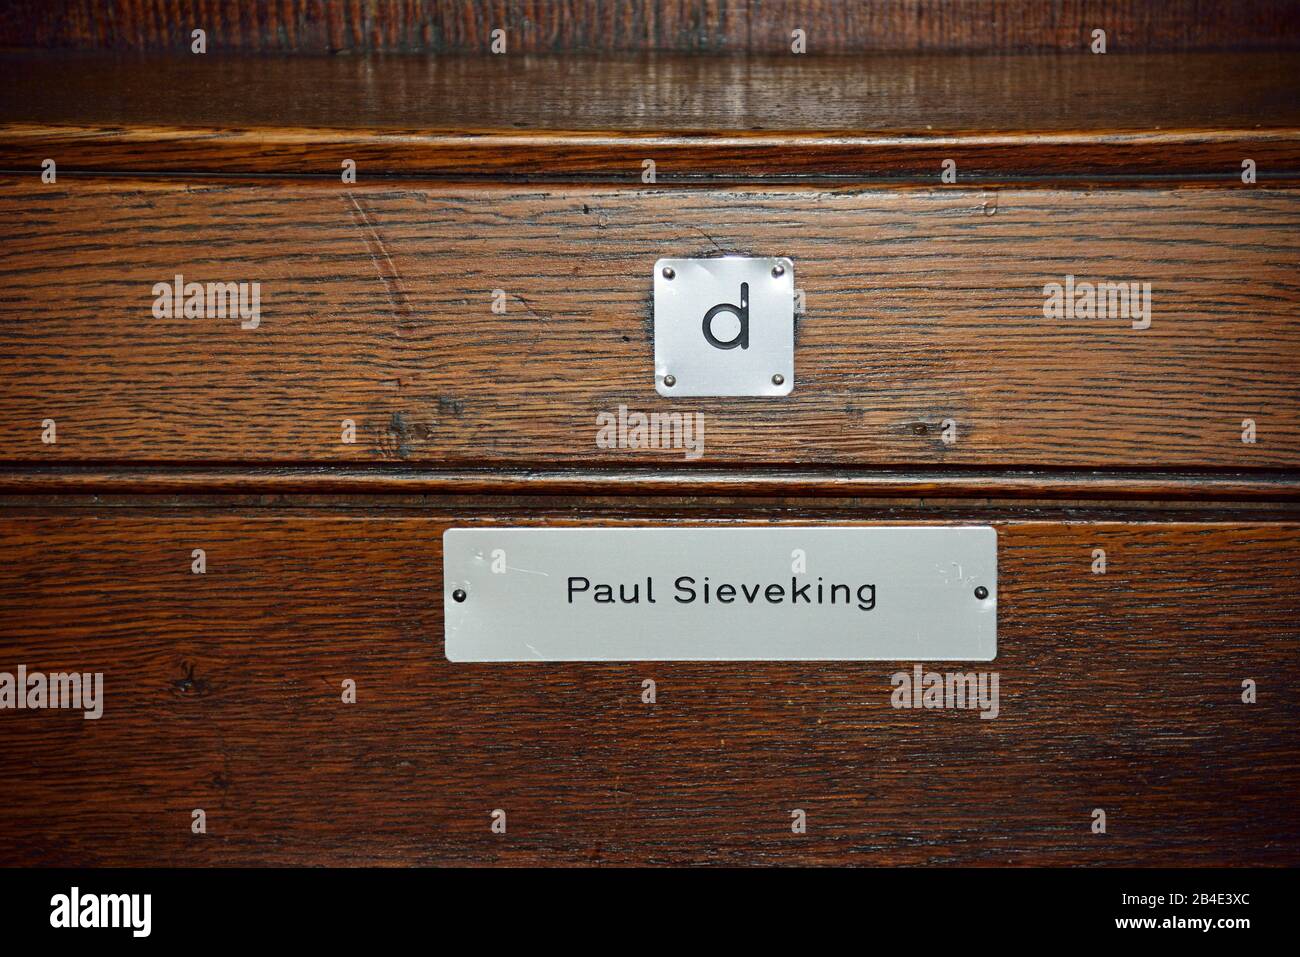 Europe, Germany, Hamburg, City, Chamber of Commerce, historical stock exchange hall, bench with nameplate Paul Sieveking, former mayor, Stock Photo